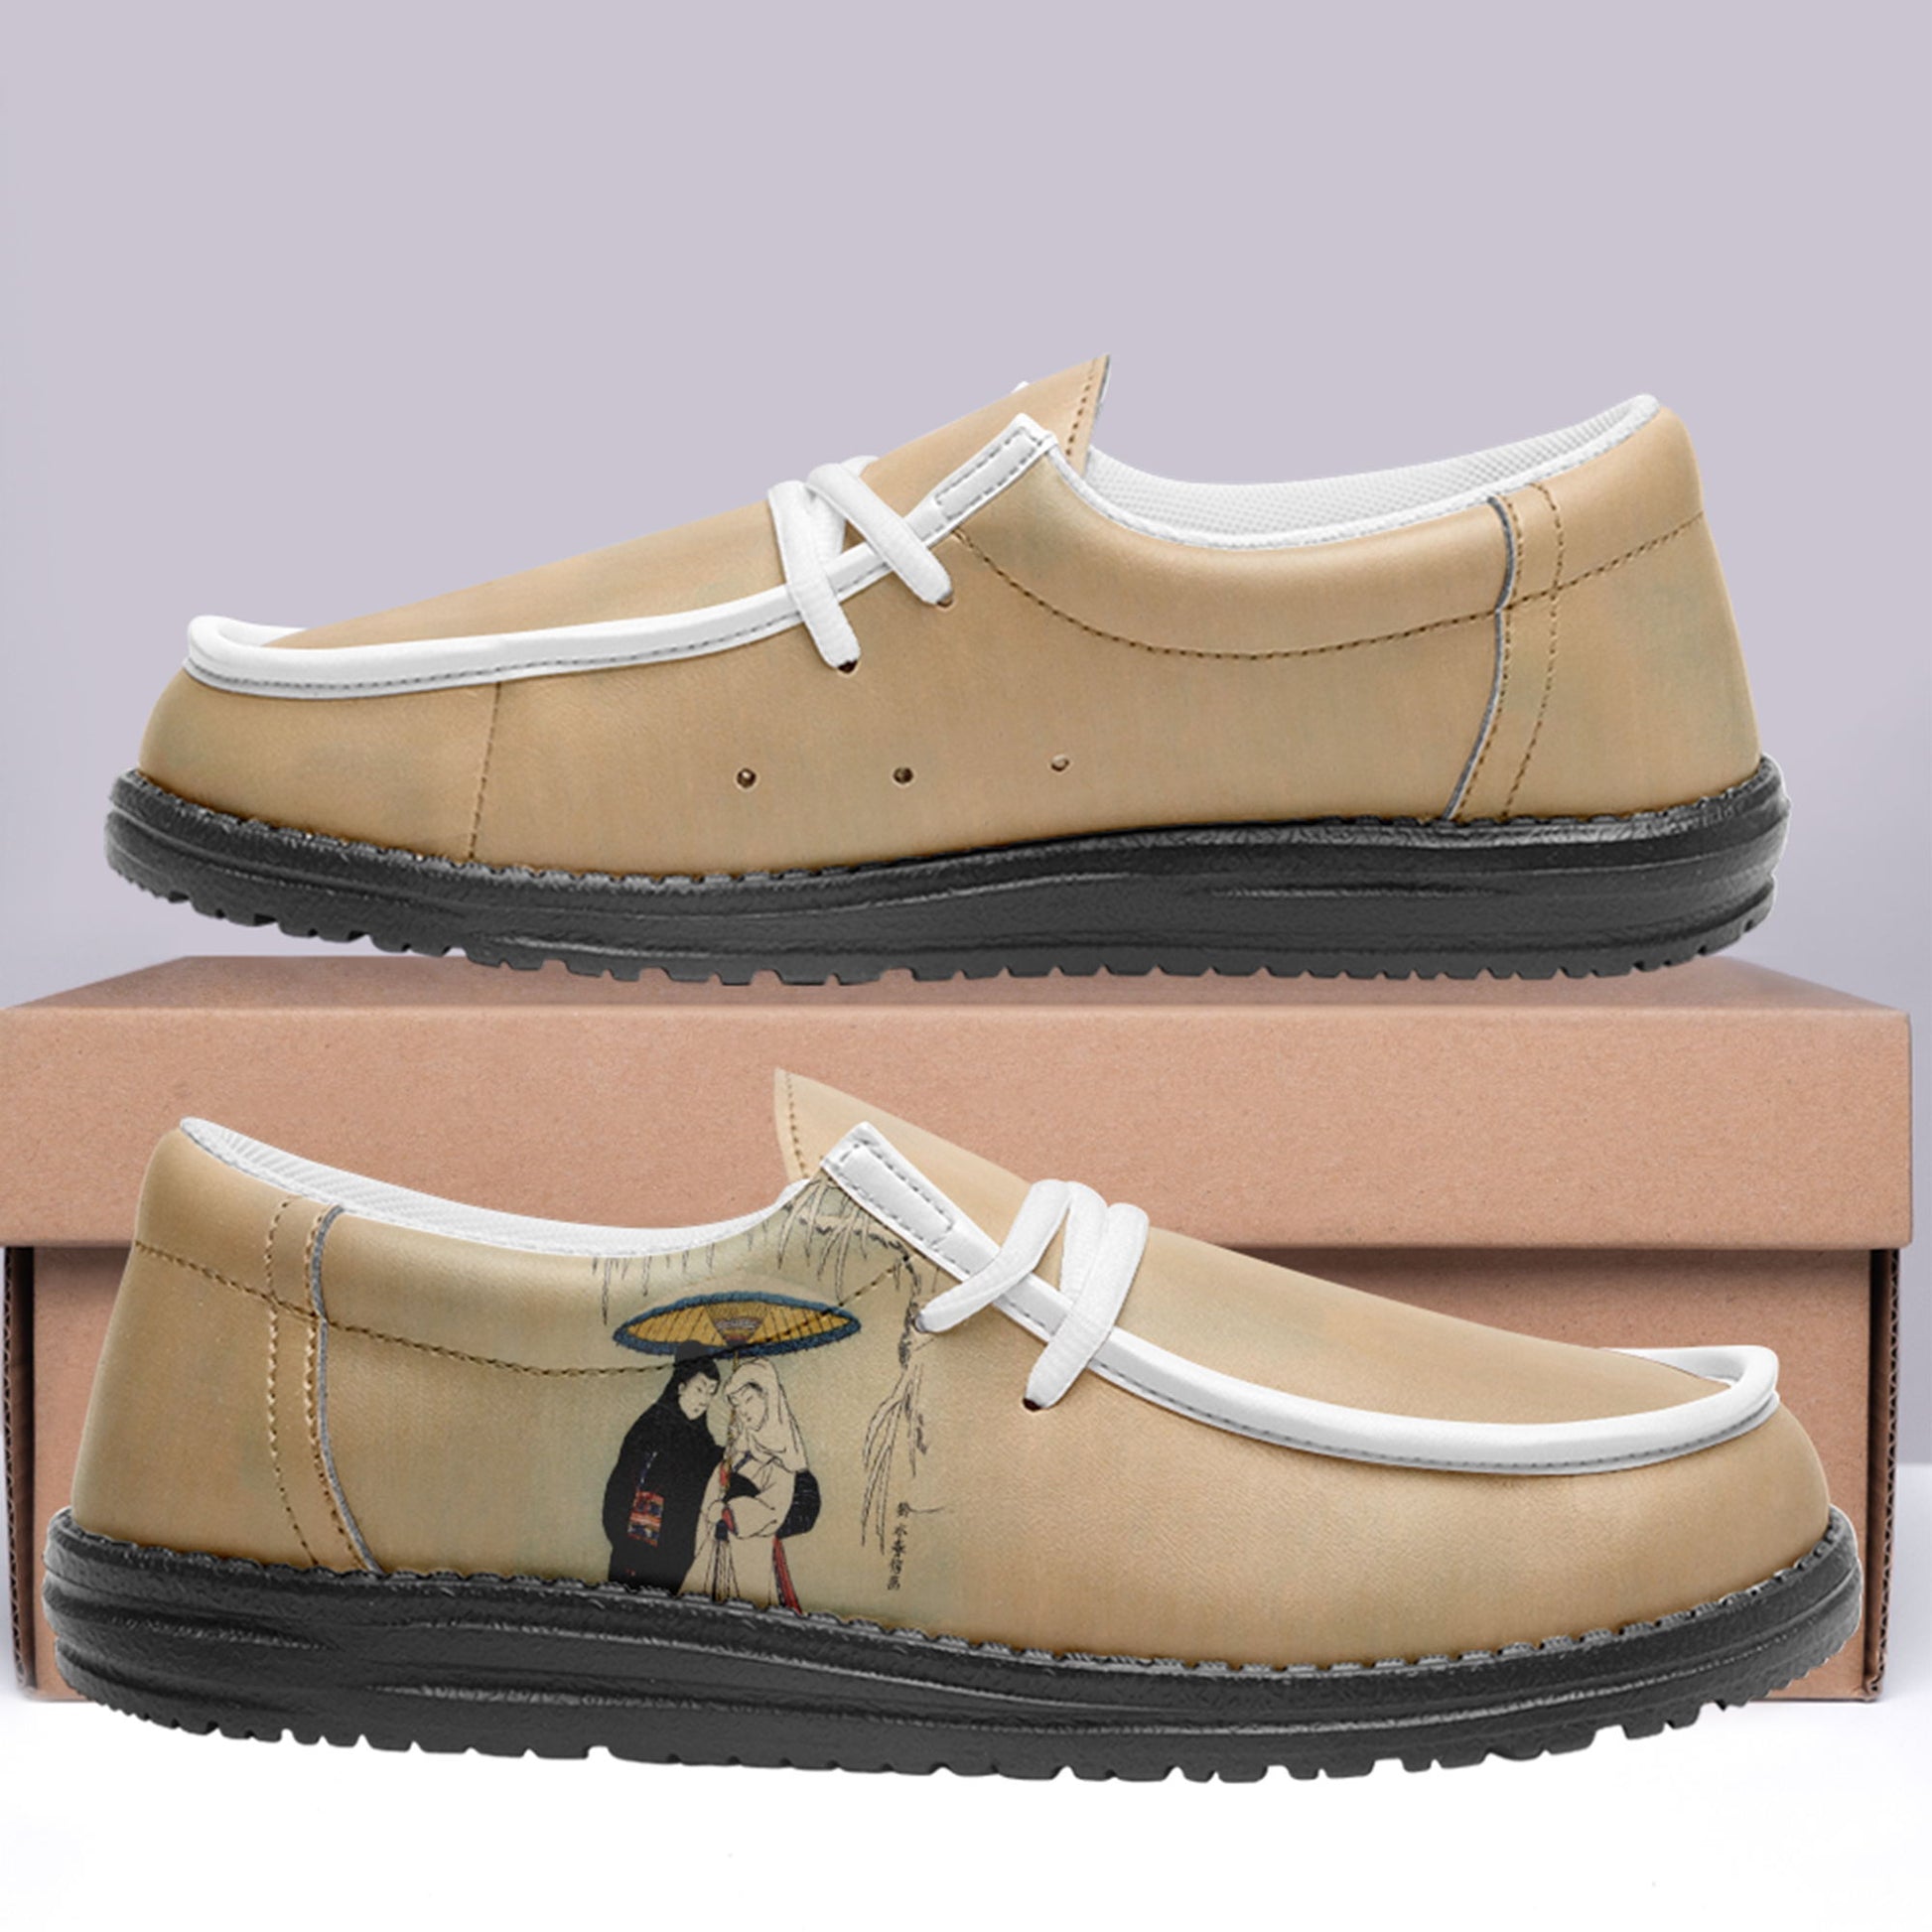 customize printed yo bro shoes ukiyo-e suzuki harunobu's couple under umbrella in snow casual shoes white shoelace 6